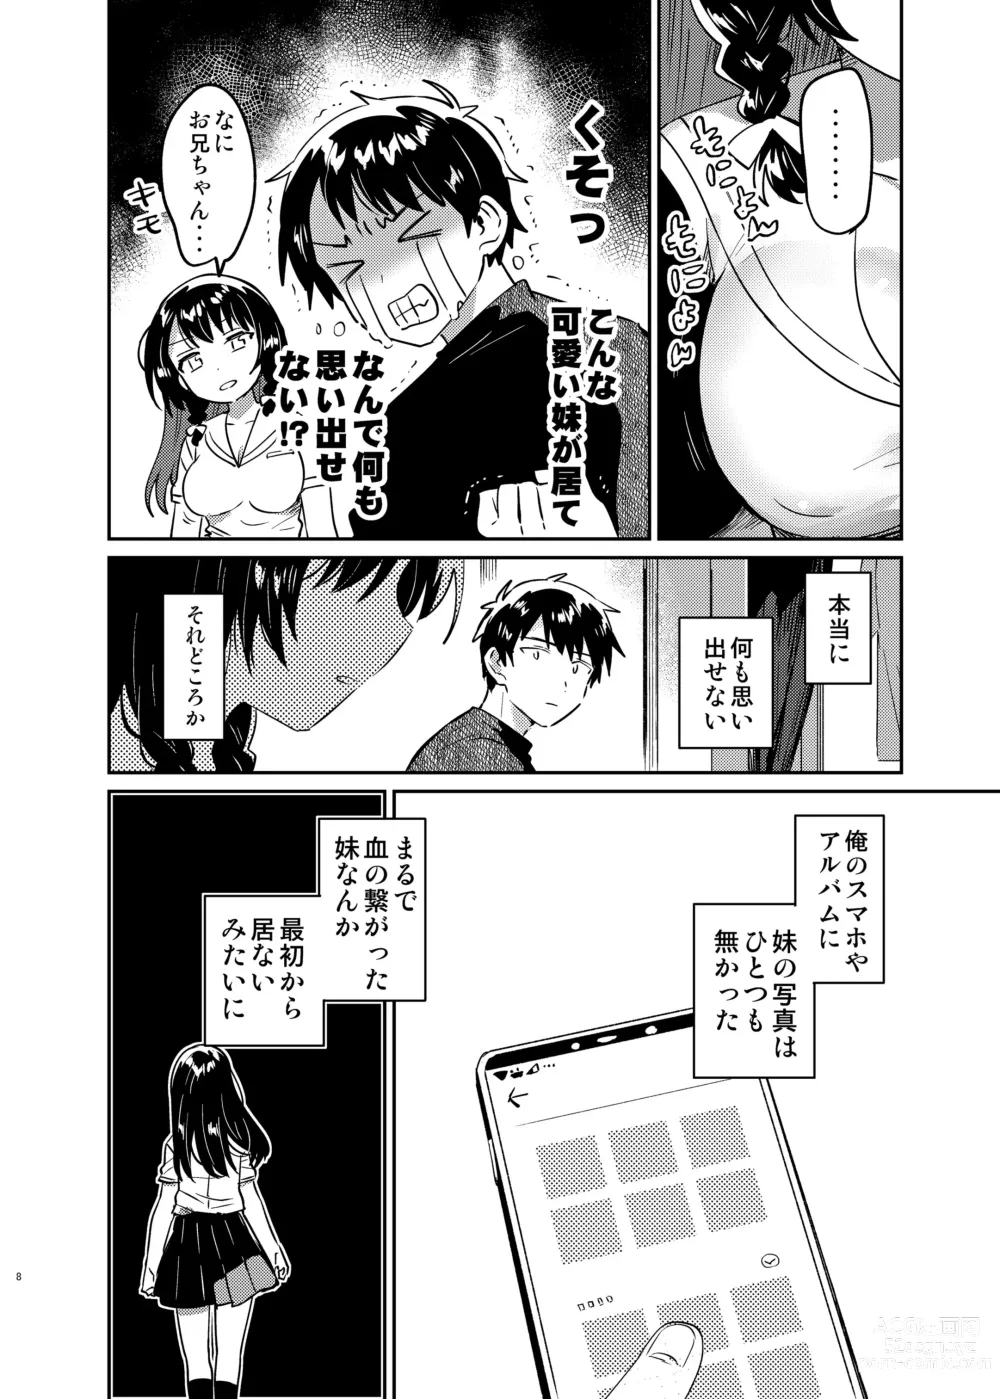 Page 7 of doujinshi Onii-chan wa Amnesia